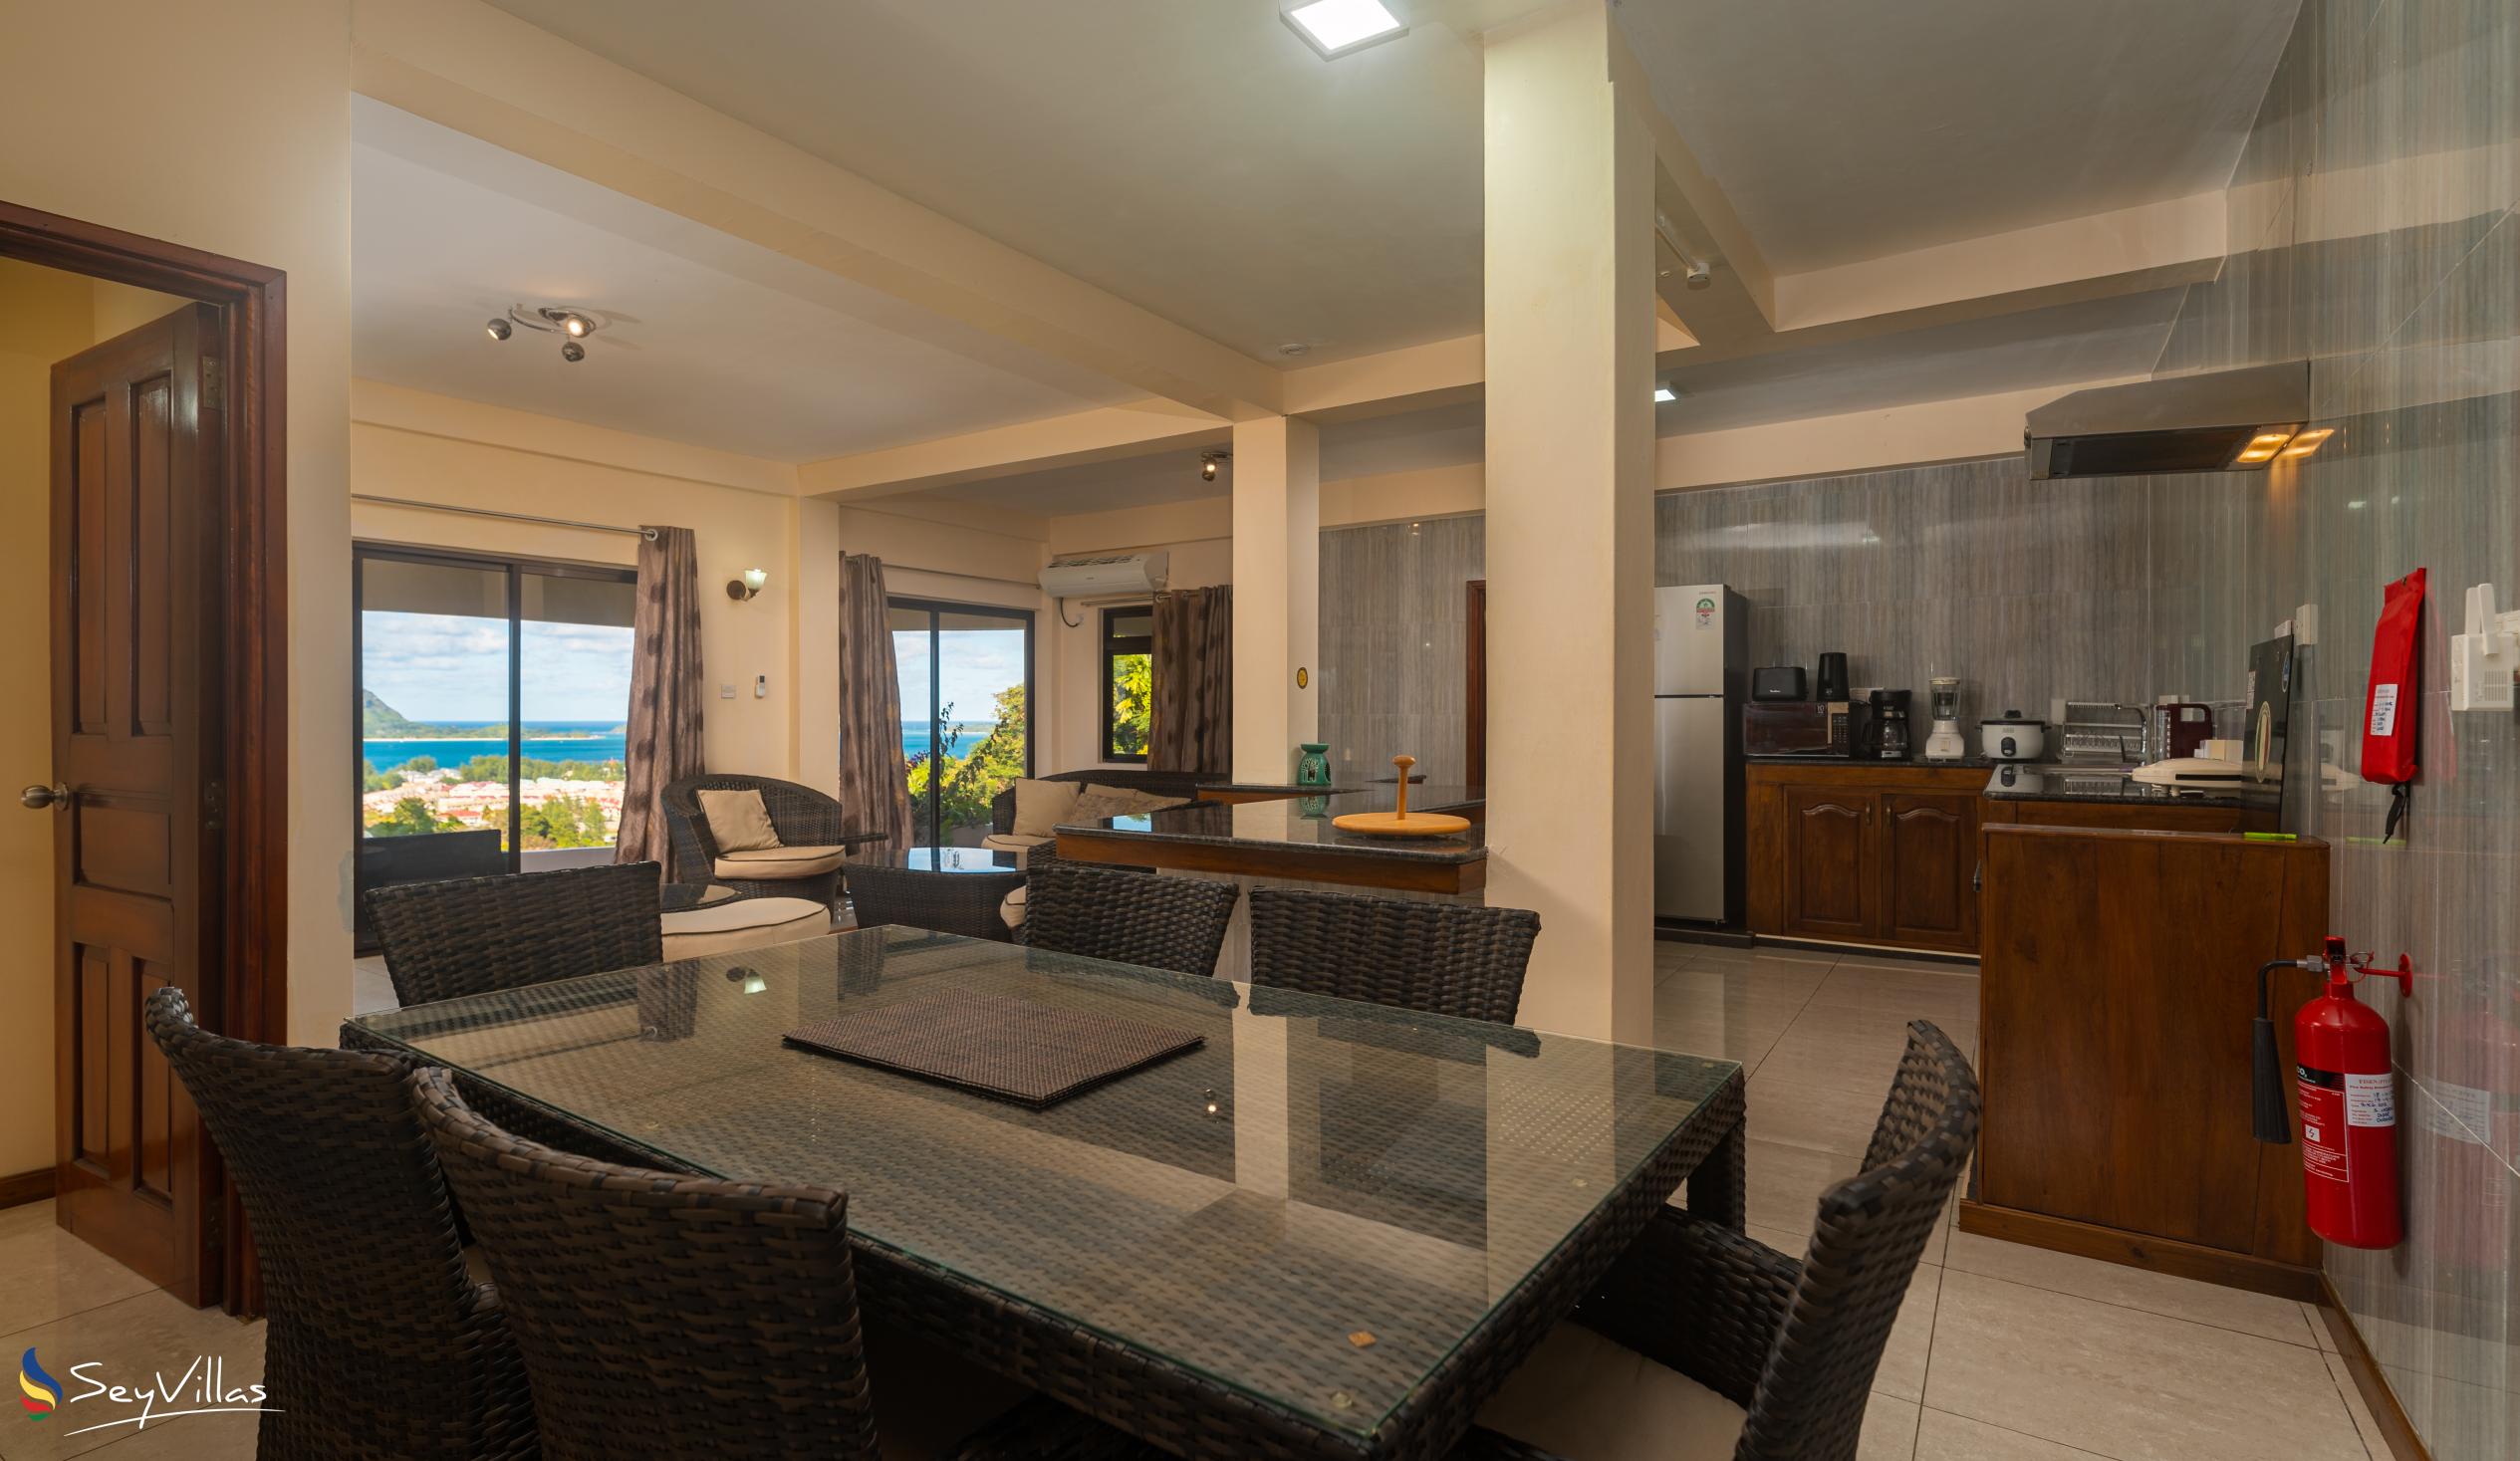 Foto 66: Maison L'Horizon - Appartamento con 2 camere Vann Nor - Mahé (Seychelles)